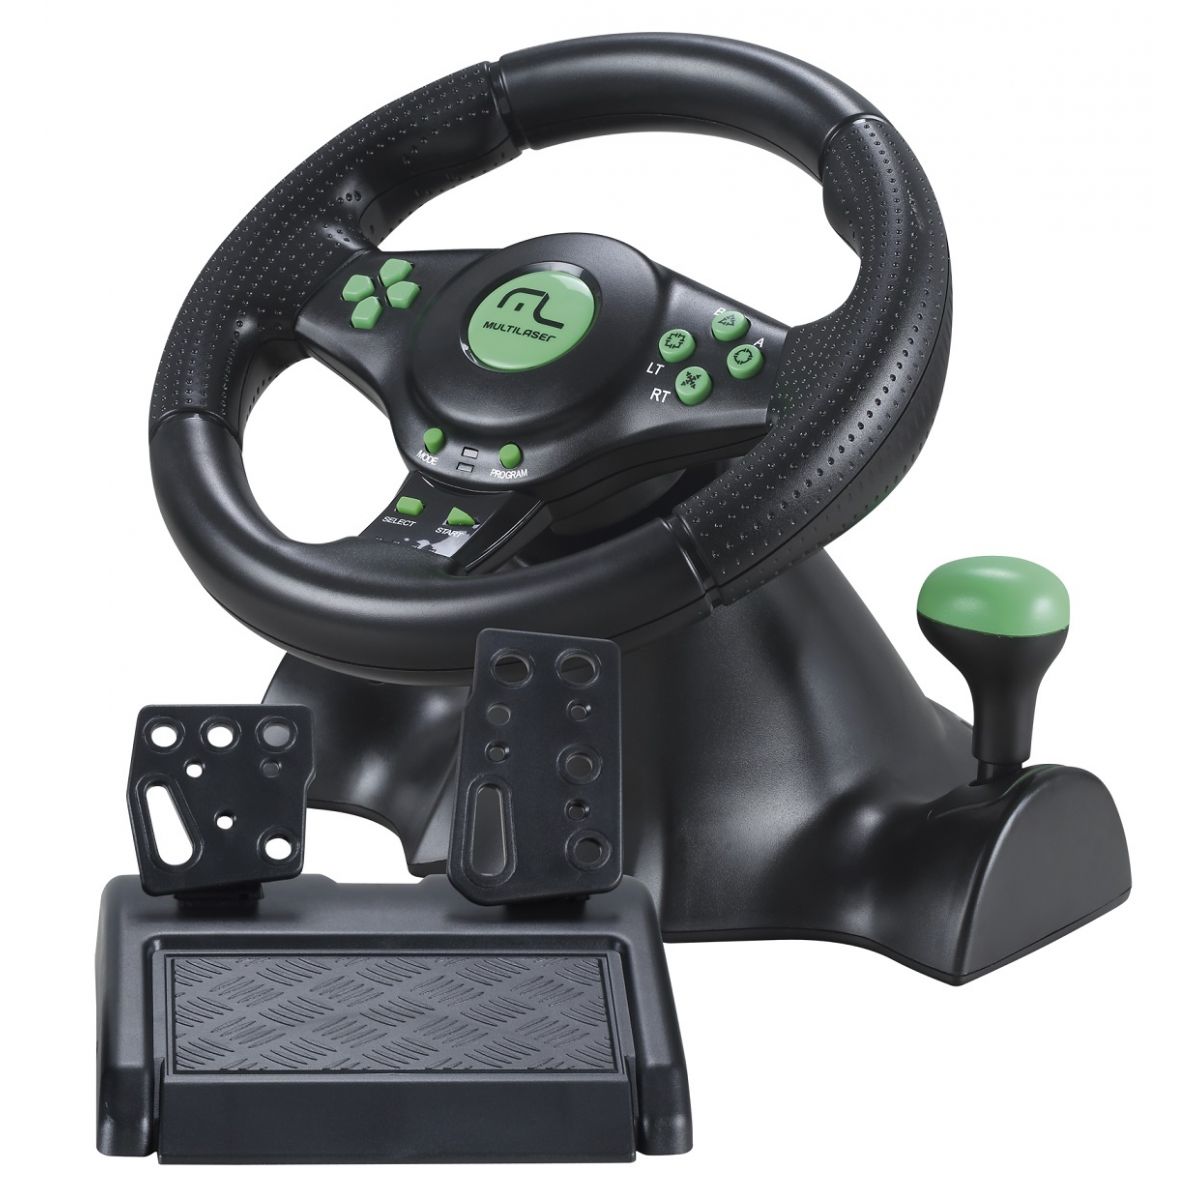 Volante Racer 4 em 1 Xbox360 / PS3 / PS2 / PC com Marcha Acoplada JS075 - Multilaser